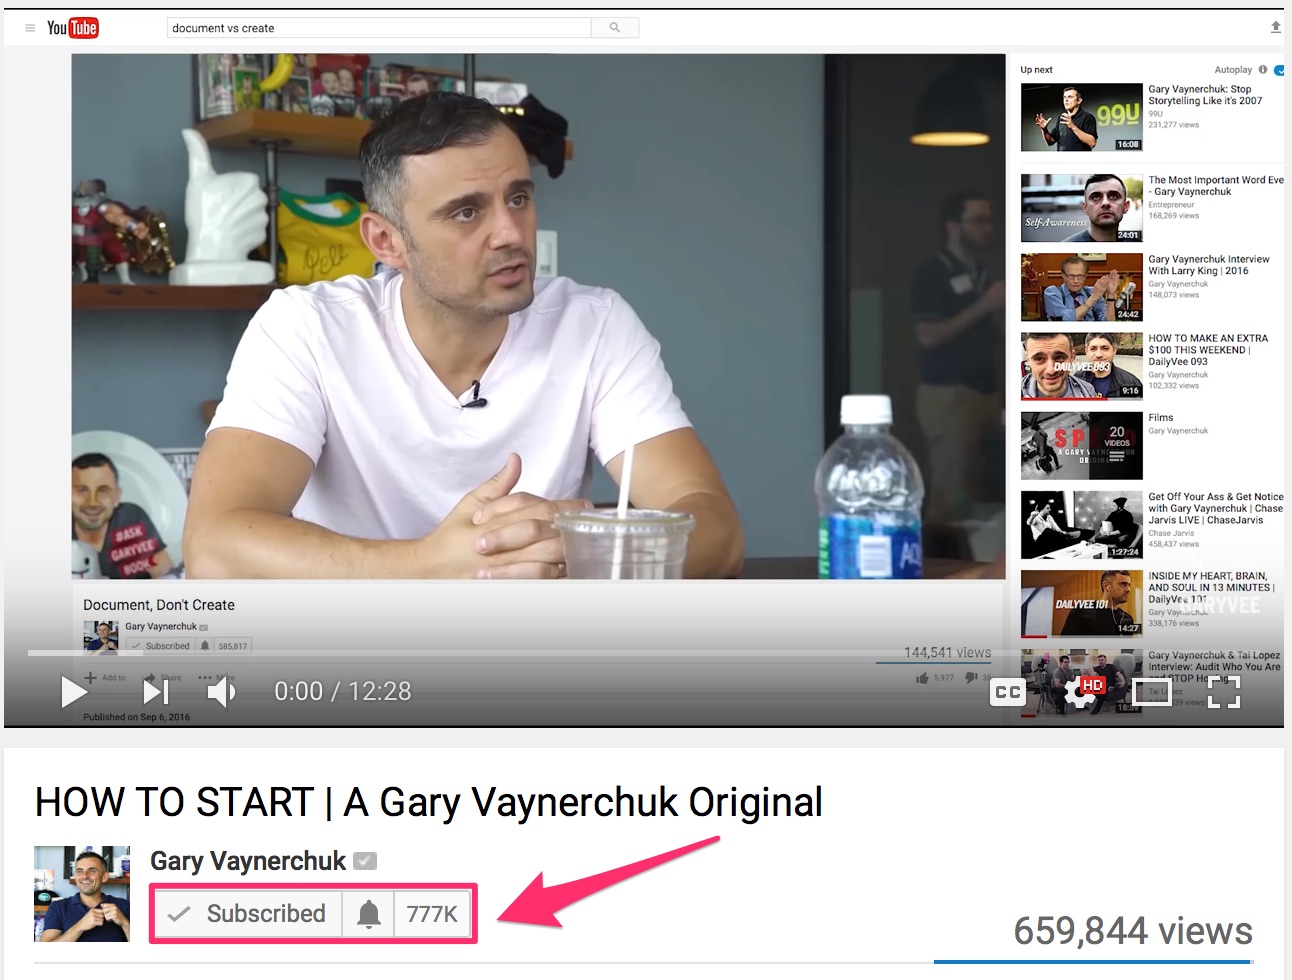 1 HOW TO START A Gary Vaynerchuk Original YouTube